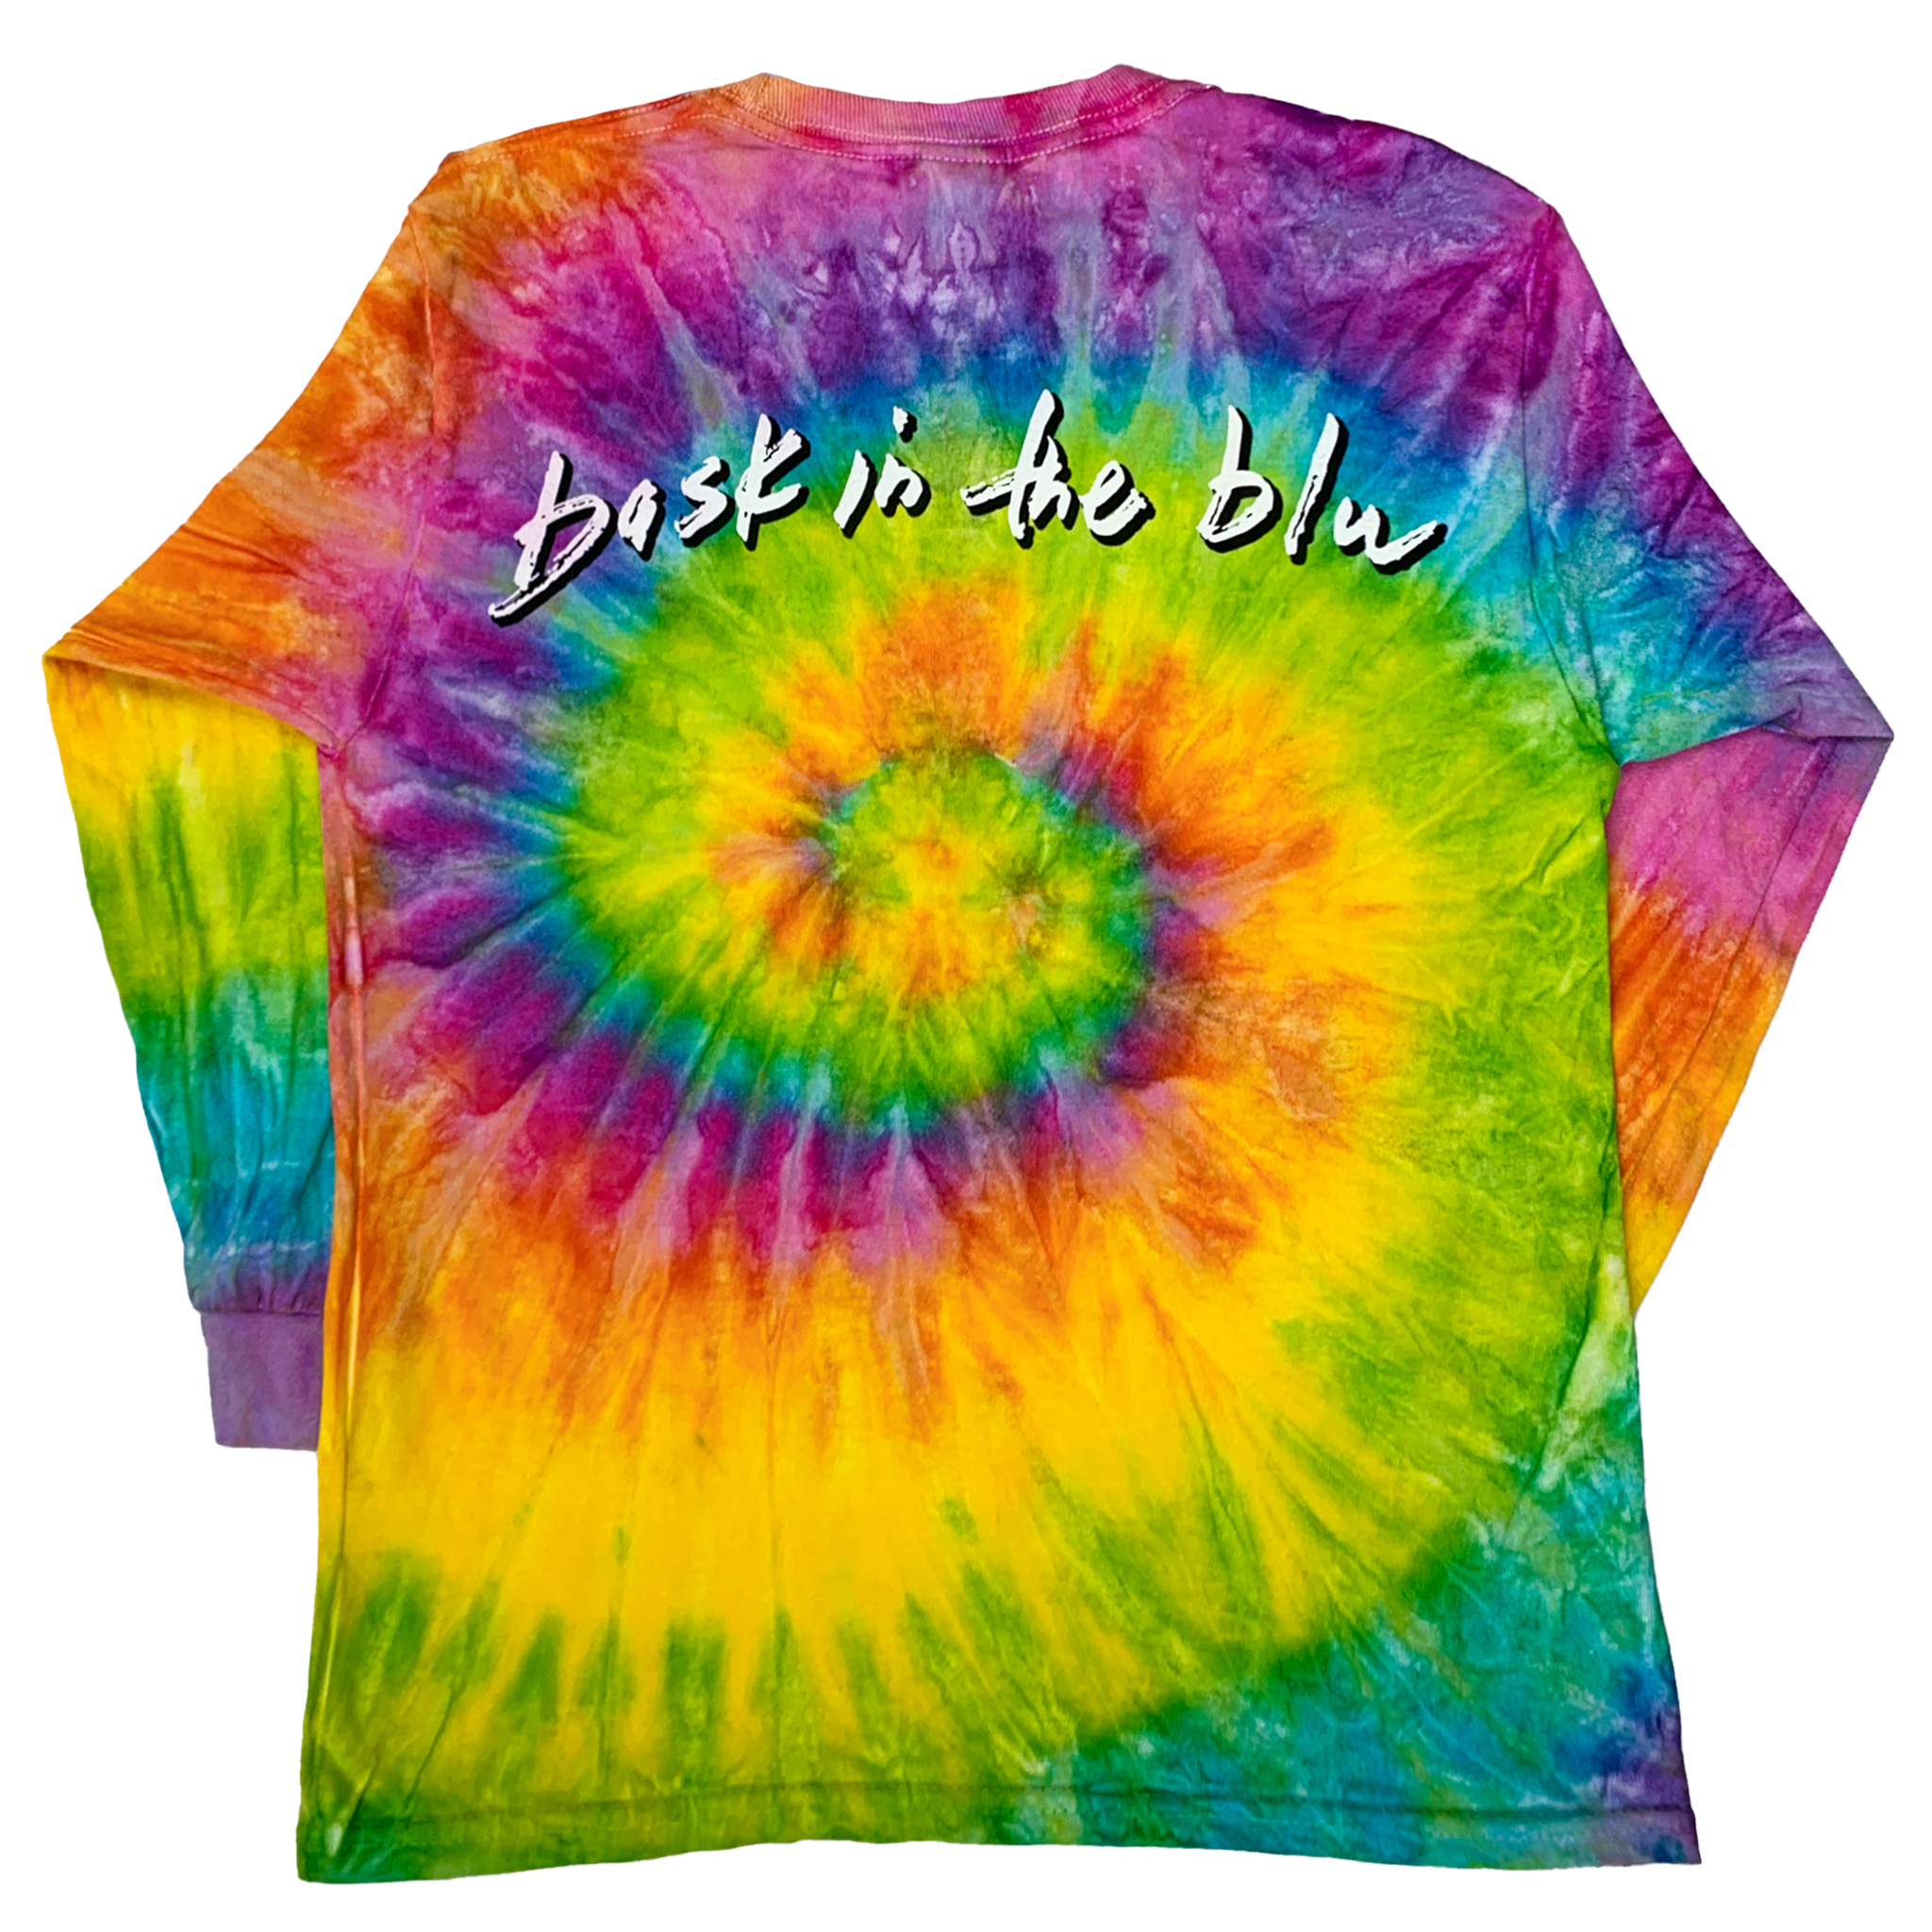 High Off Life T-Shirt (Camo Swirl Tie-Dye) Large